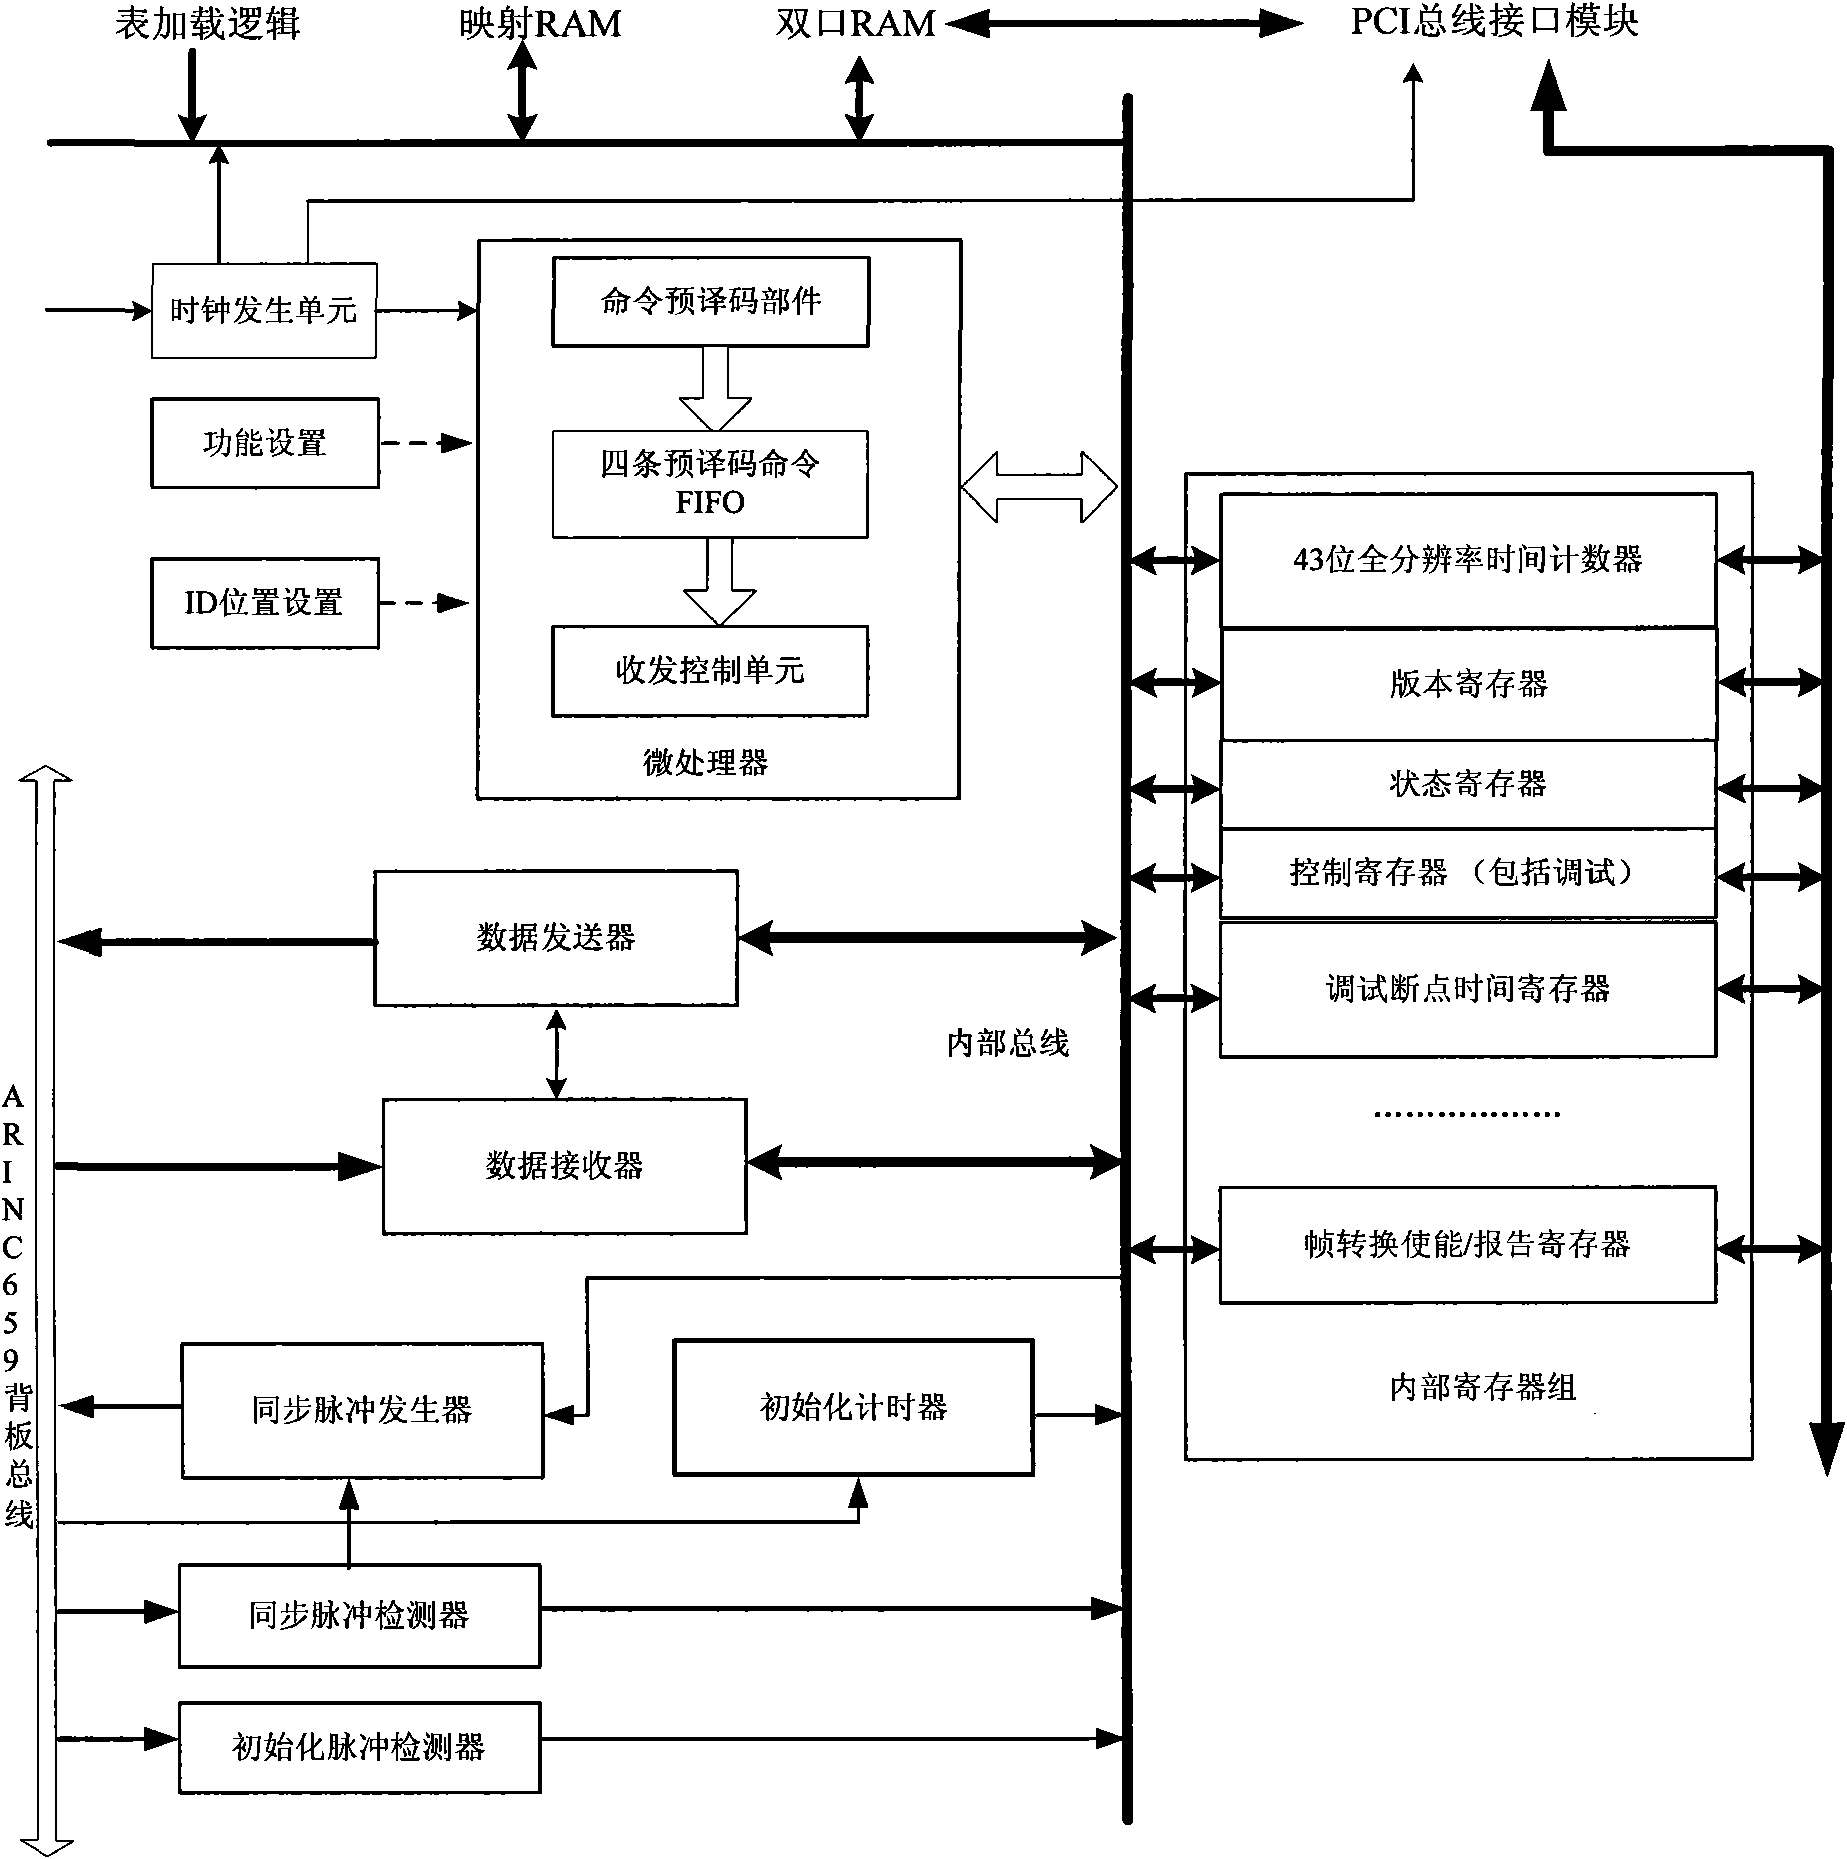 System on chip adopting ARINC 659 rear panel data bus interface chip